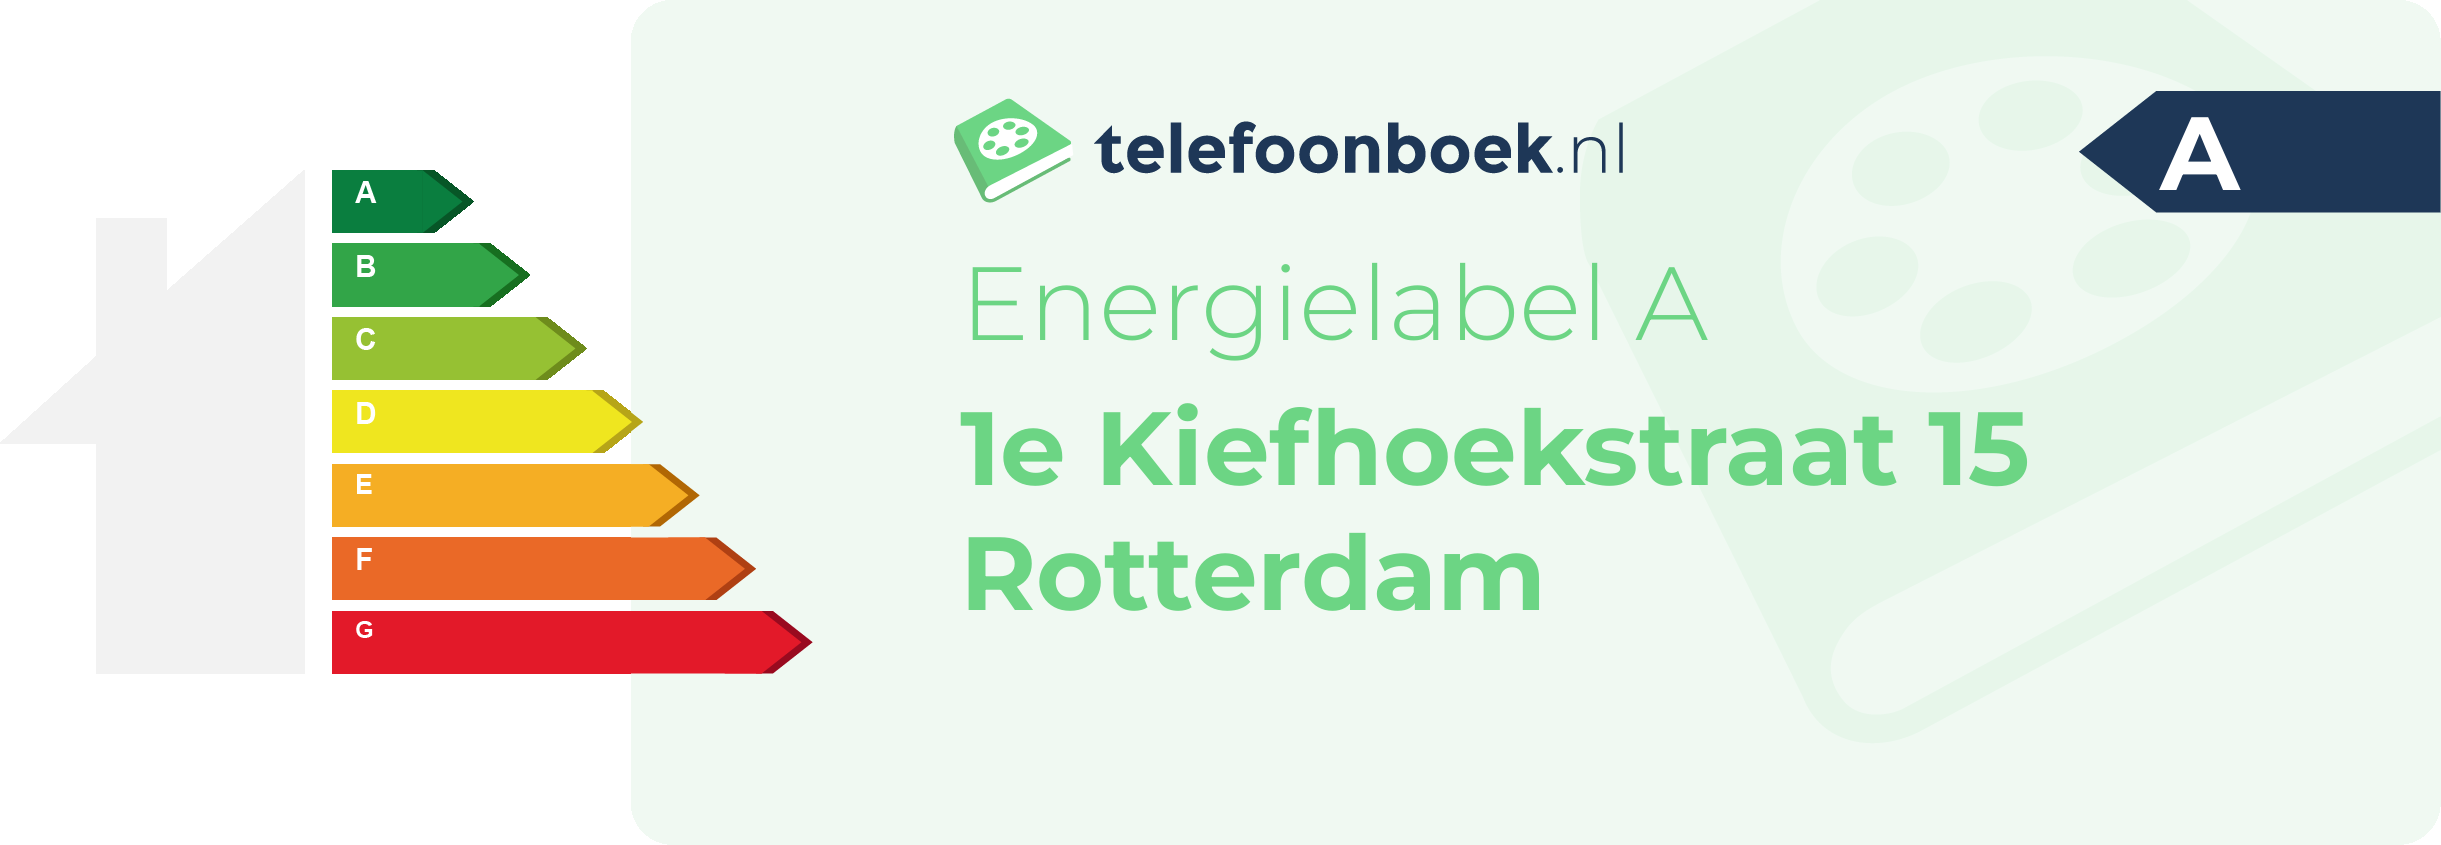 Energielabel 1e Kiefhoekstraat 15 Rotterdam